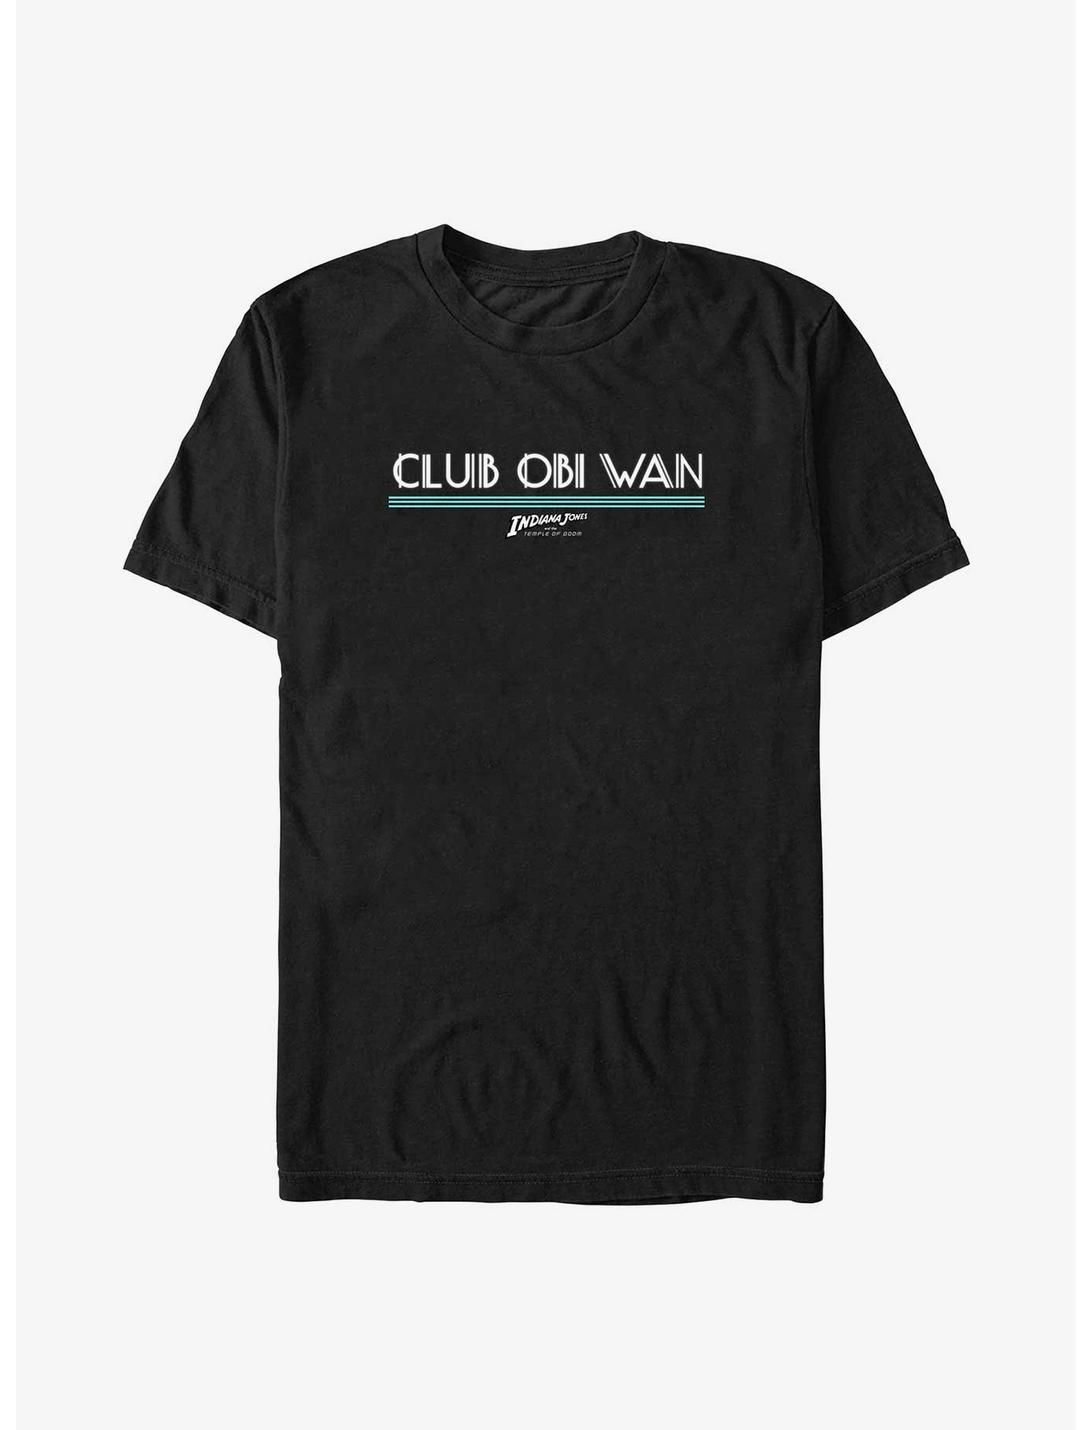 Indiana Jones Club Obi Wan Big & Tall T-Shirt, BLACK, hi-res